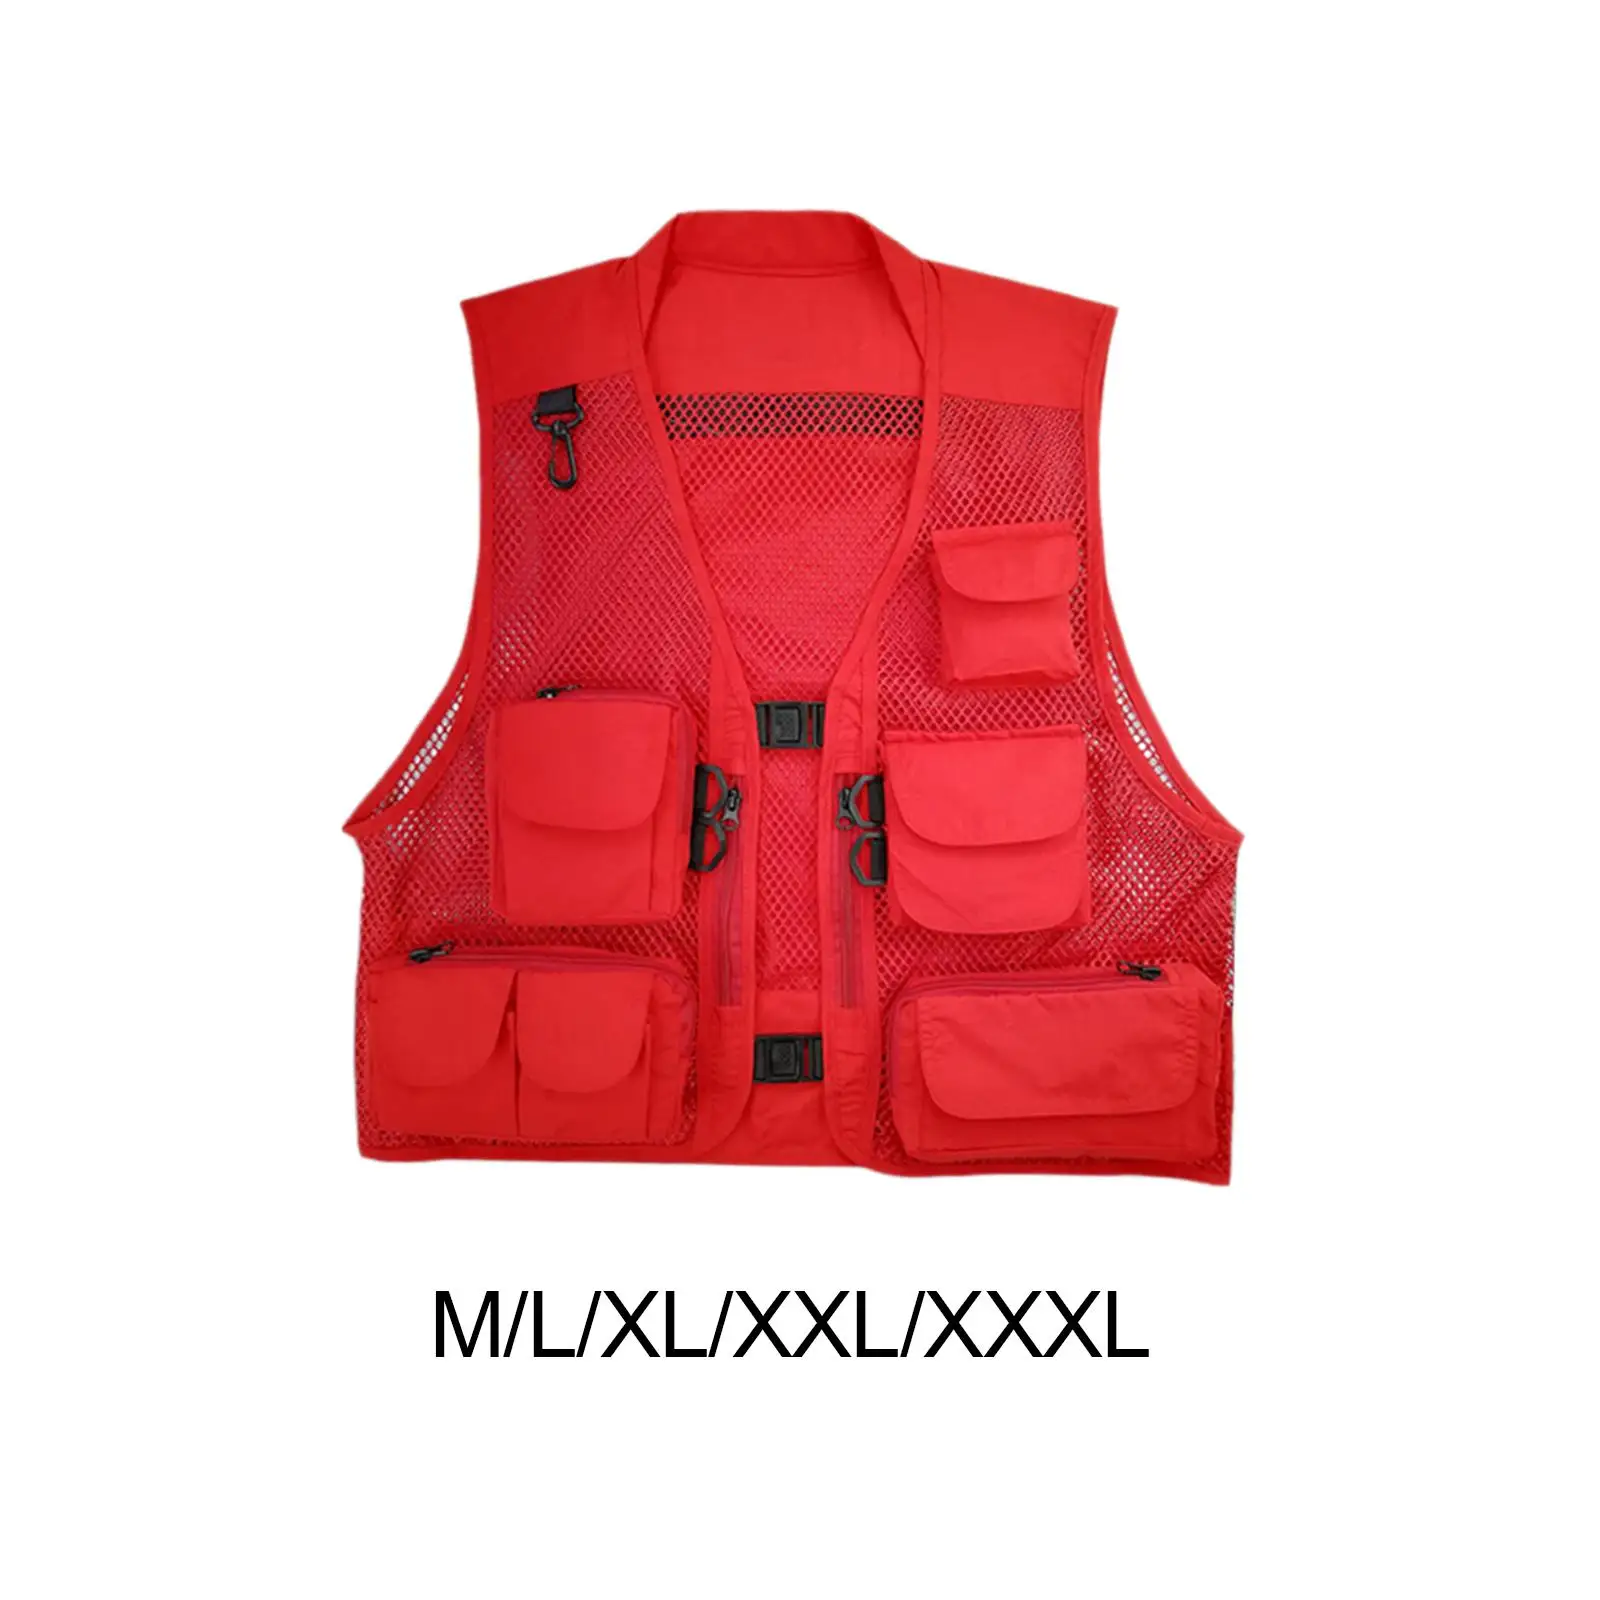 Mesh Outdoor Fishing Journalist Vest Multi Zipper Pockets Comfortable Convenient